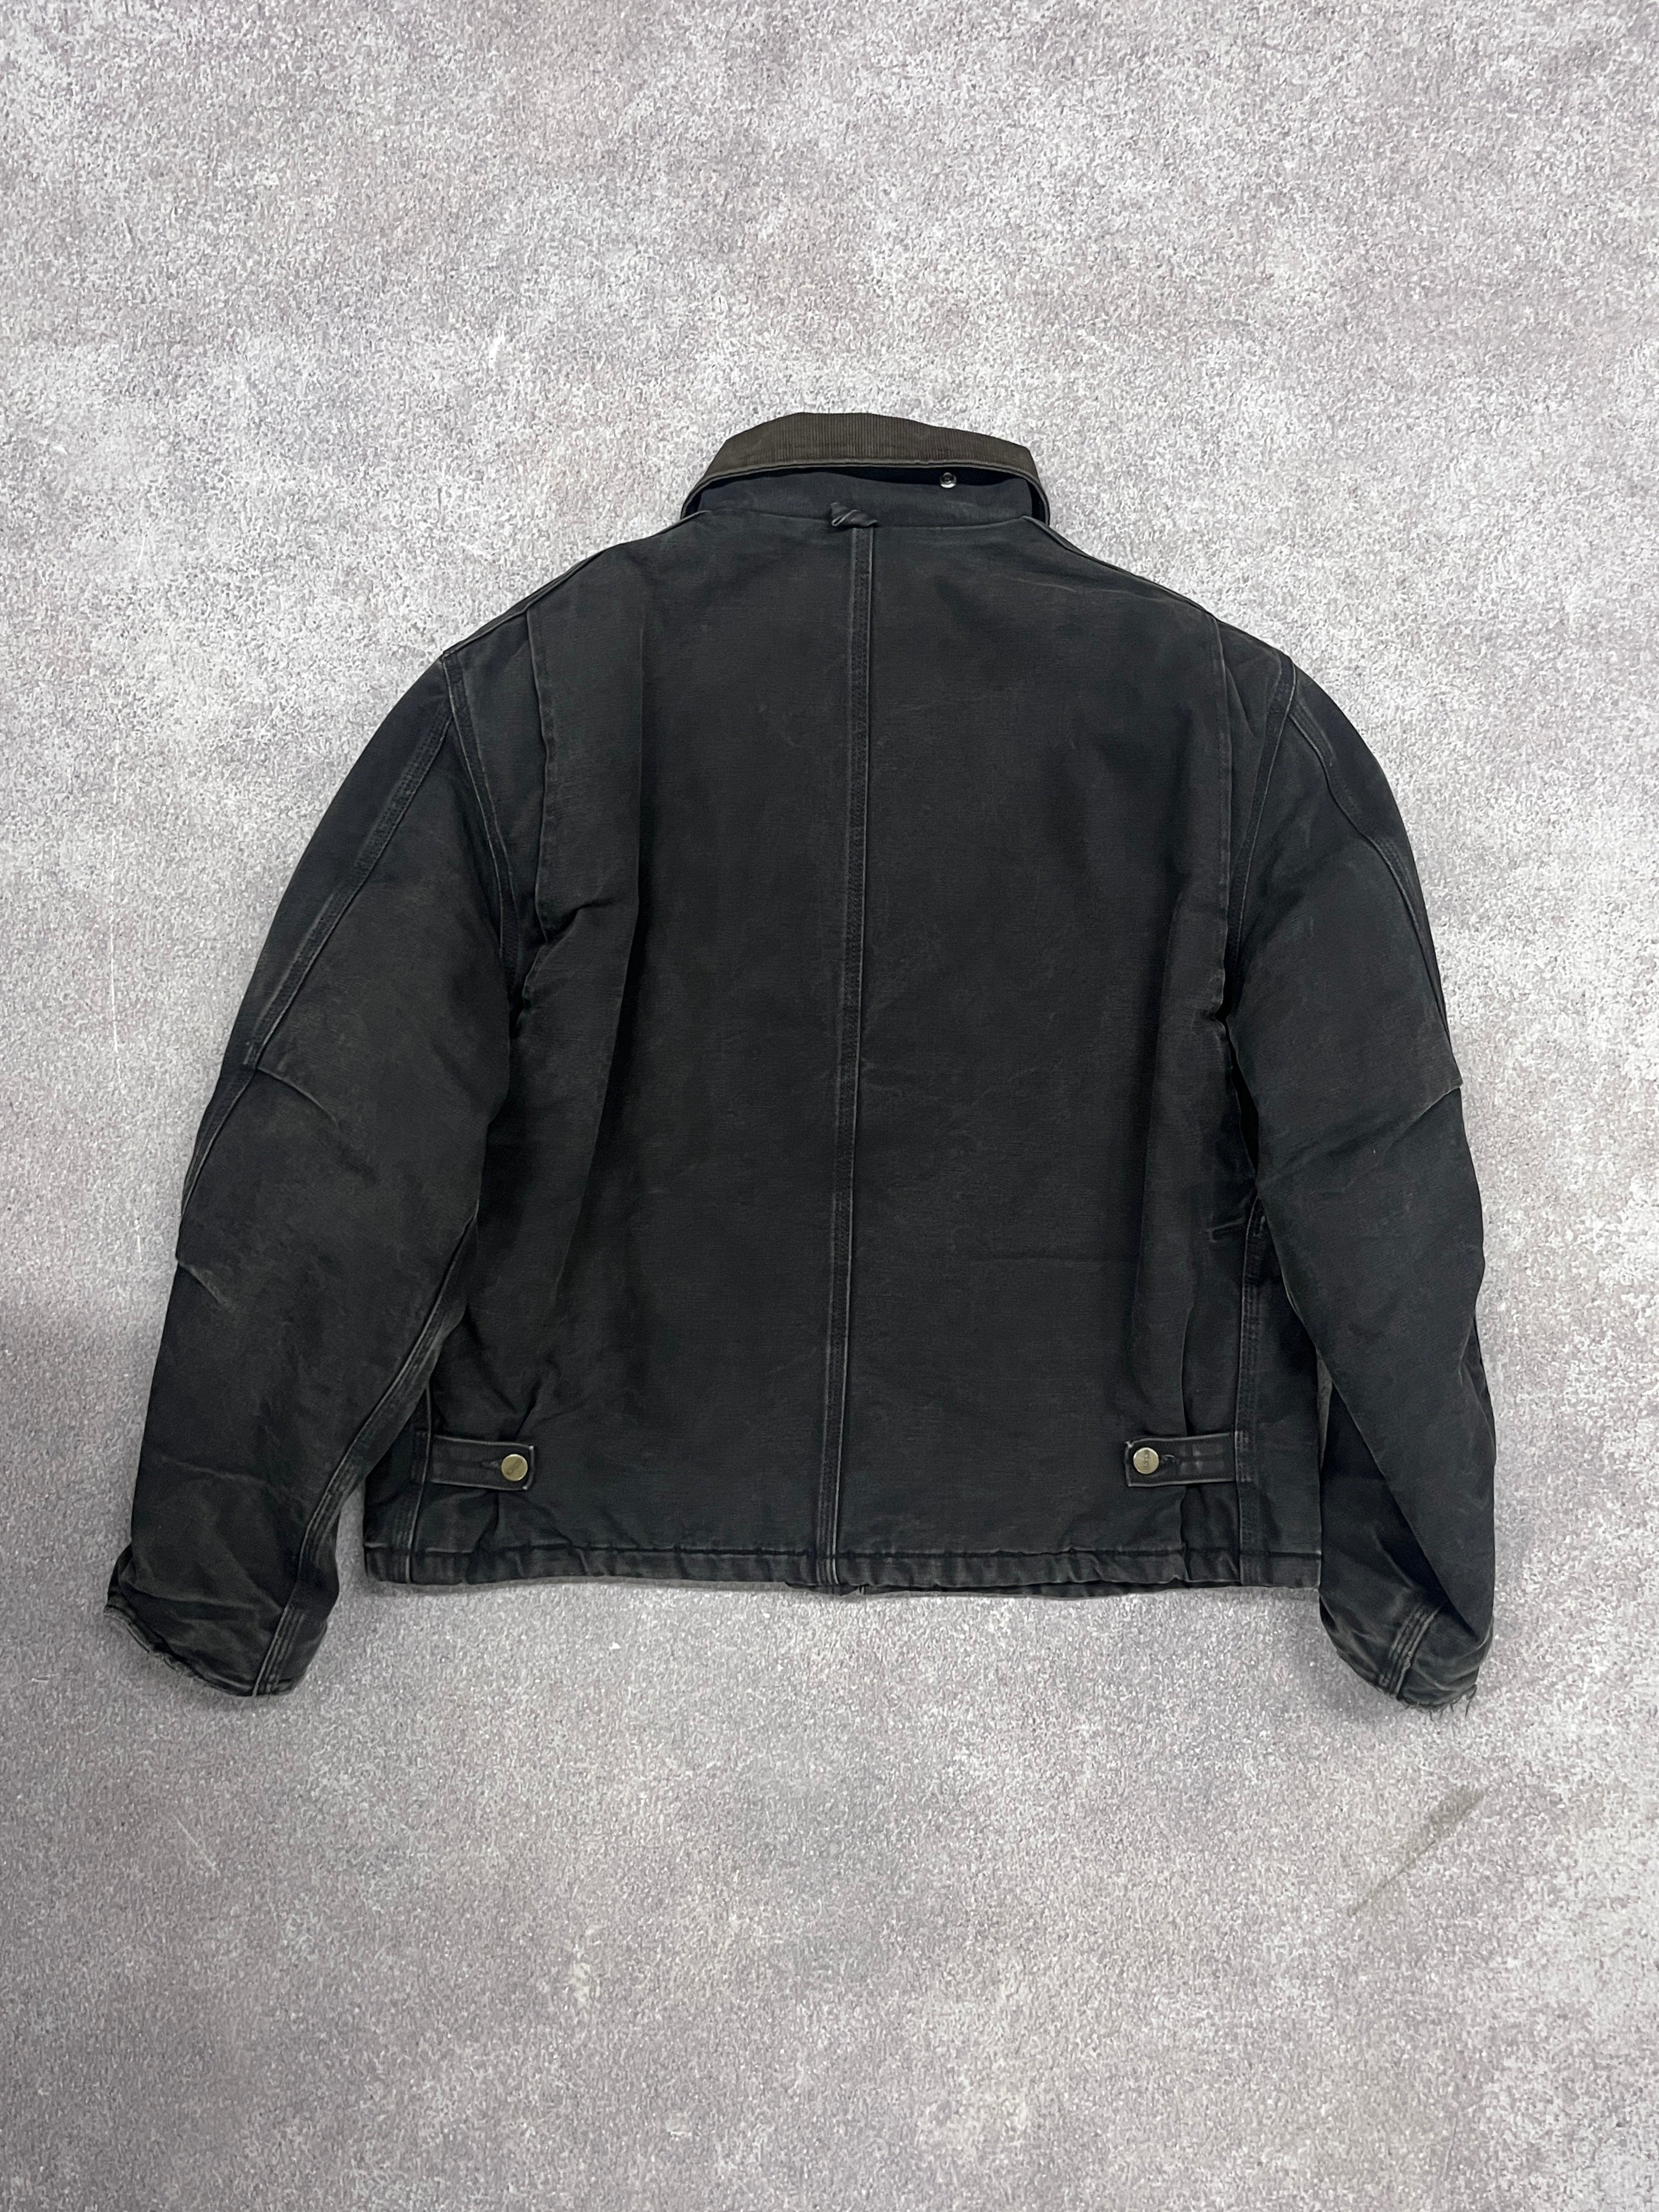 Vintage Carhartt Workwear Jacket Grey // Large (Boxy) - RHAGHOUSE VINTAGE